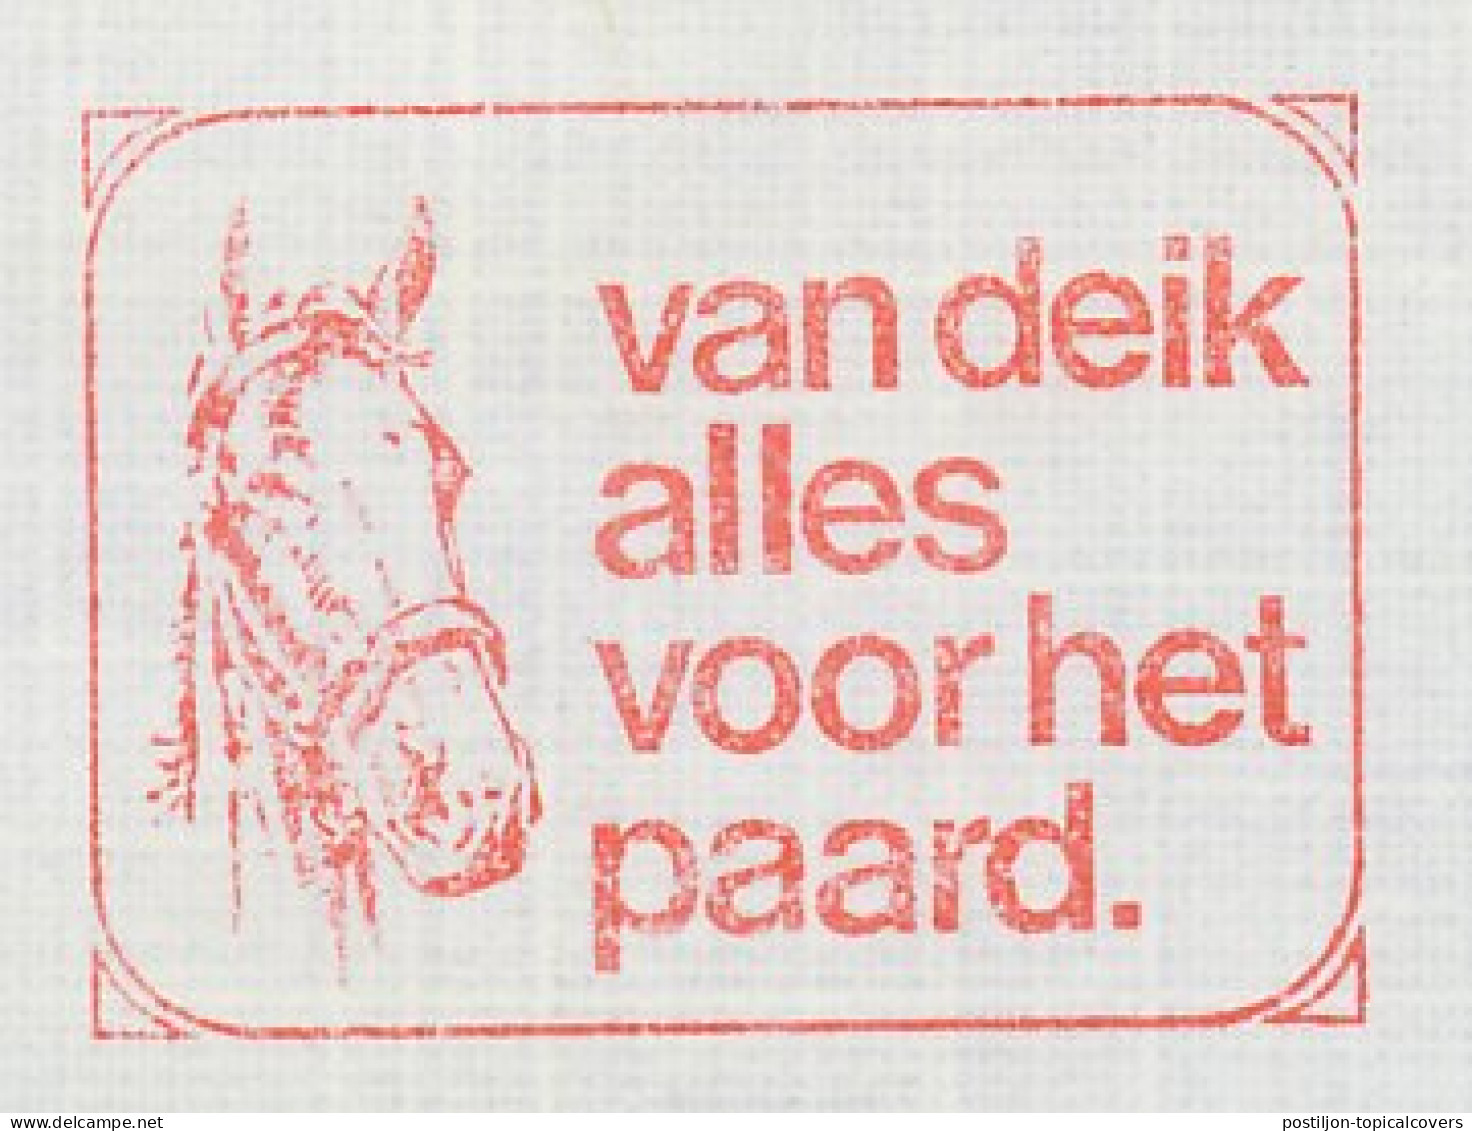 Meter Cut Netherlands 1979 Horse - Paardensport